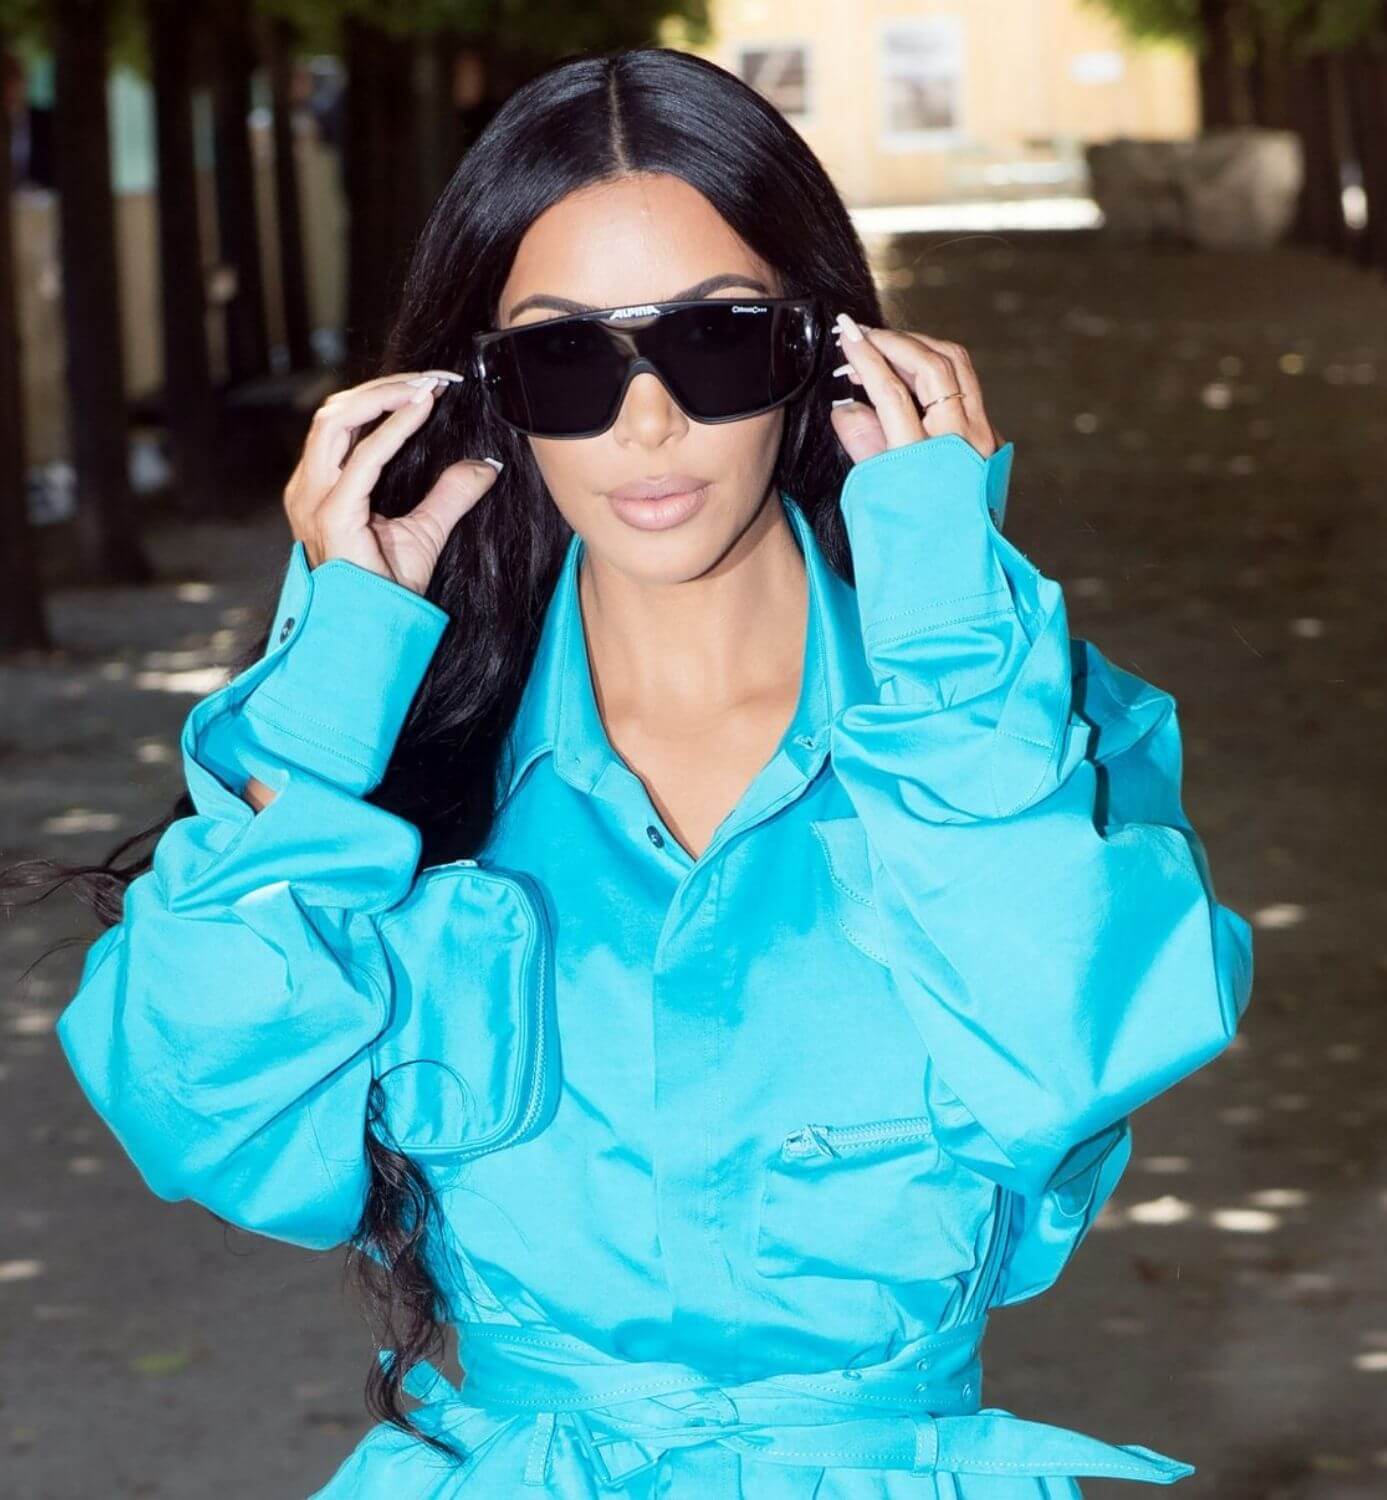 Kim kardashian wearing shield sunglasses